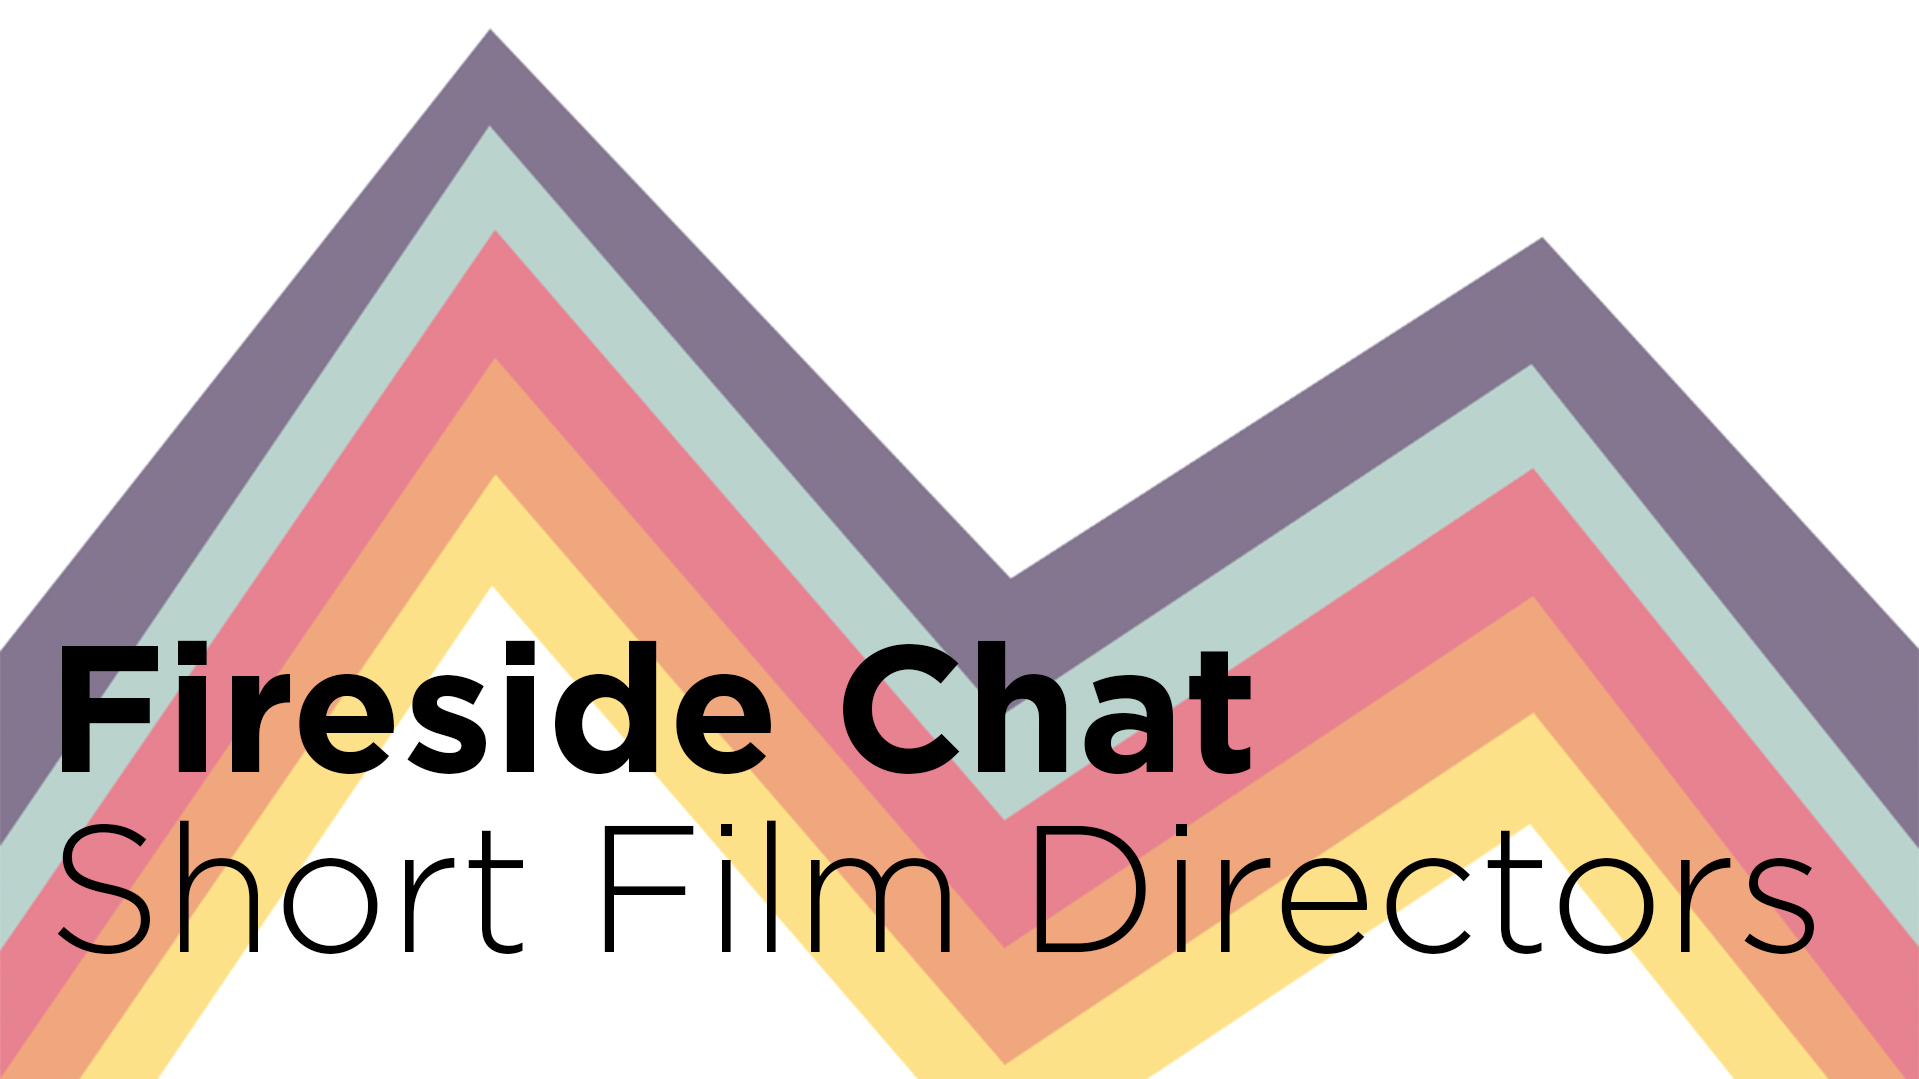 Fireside Chat Short Film Directors